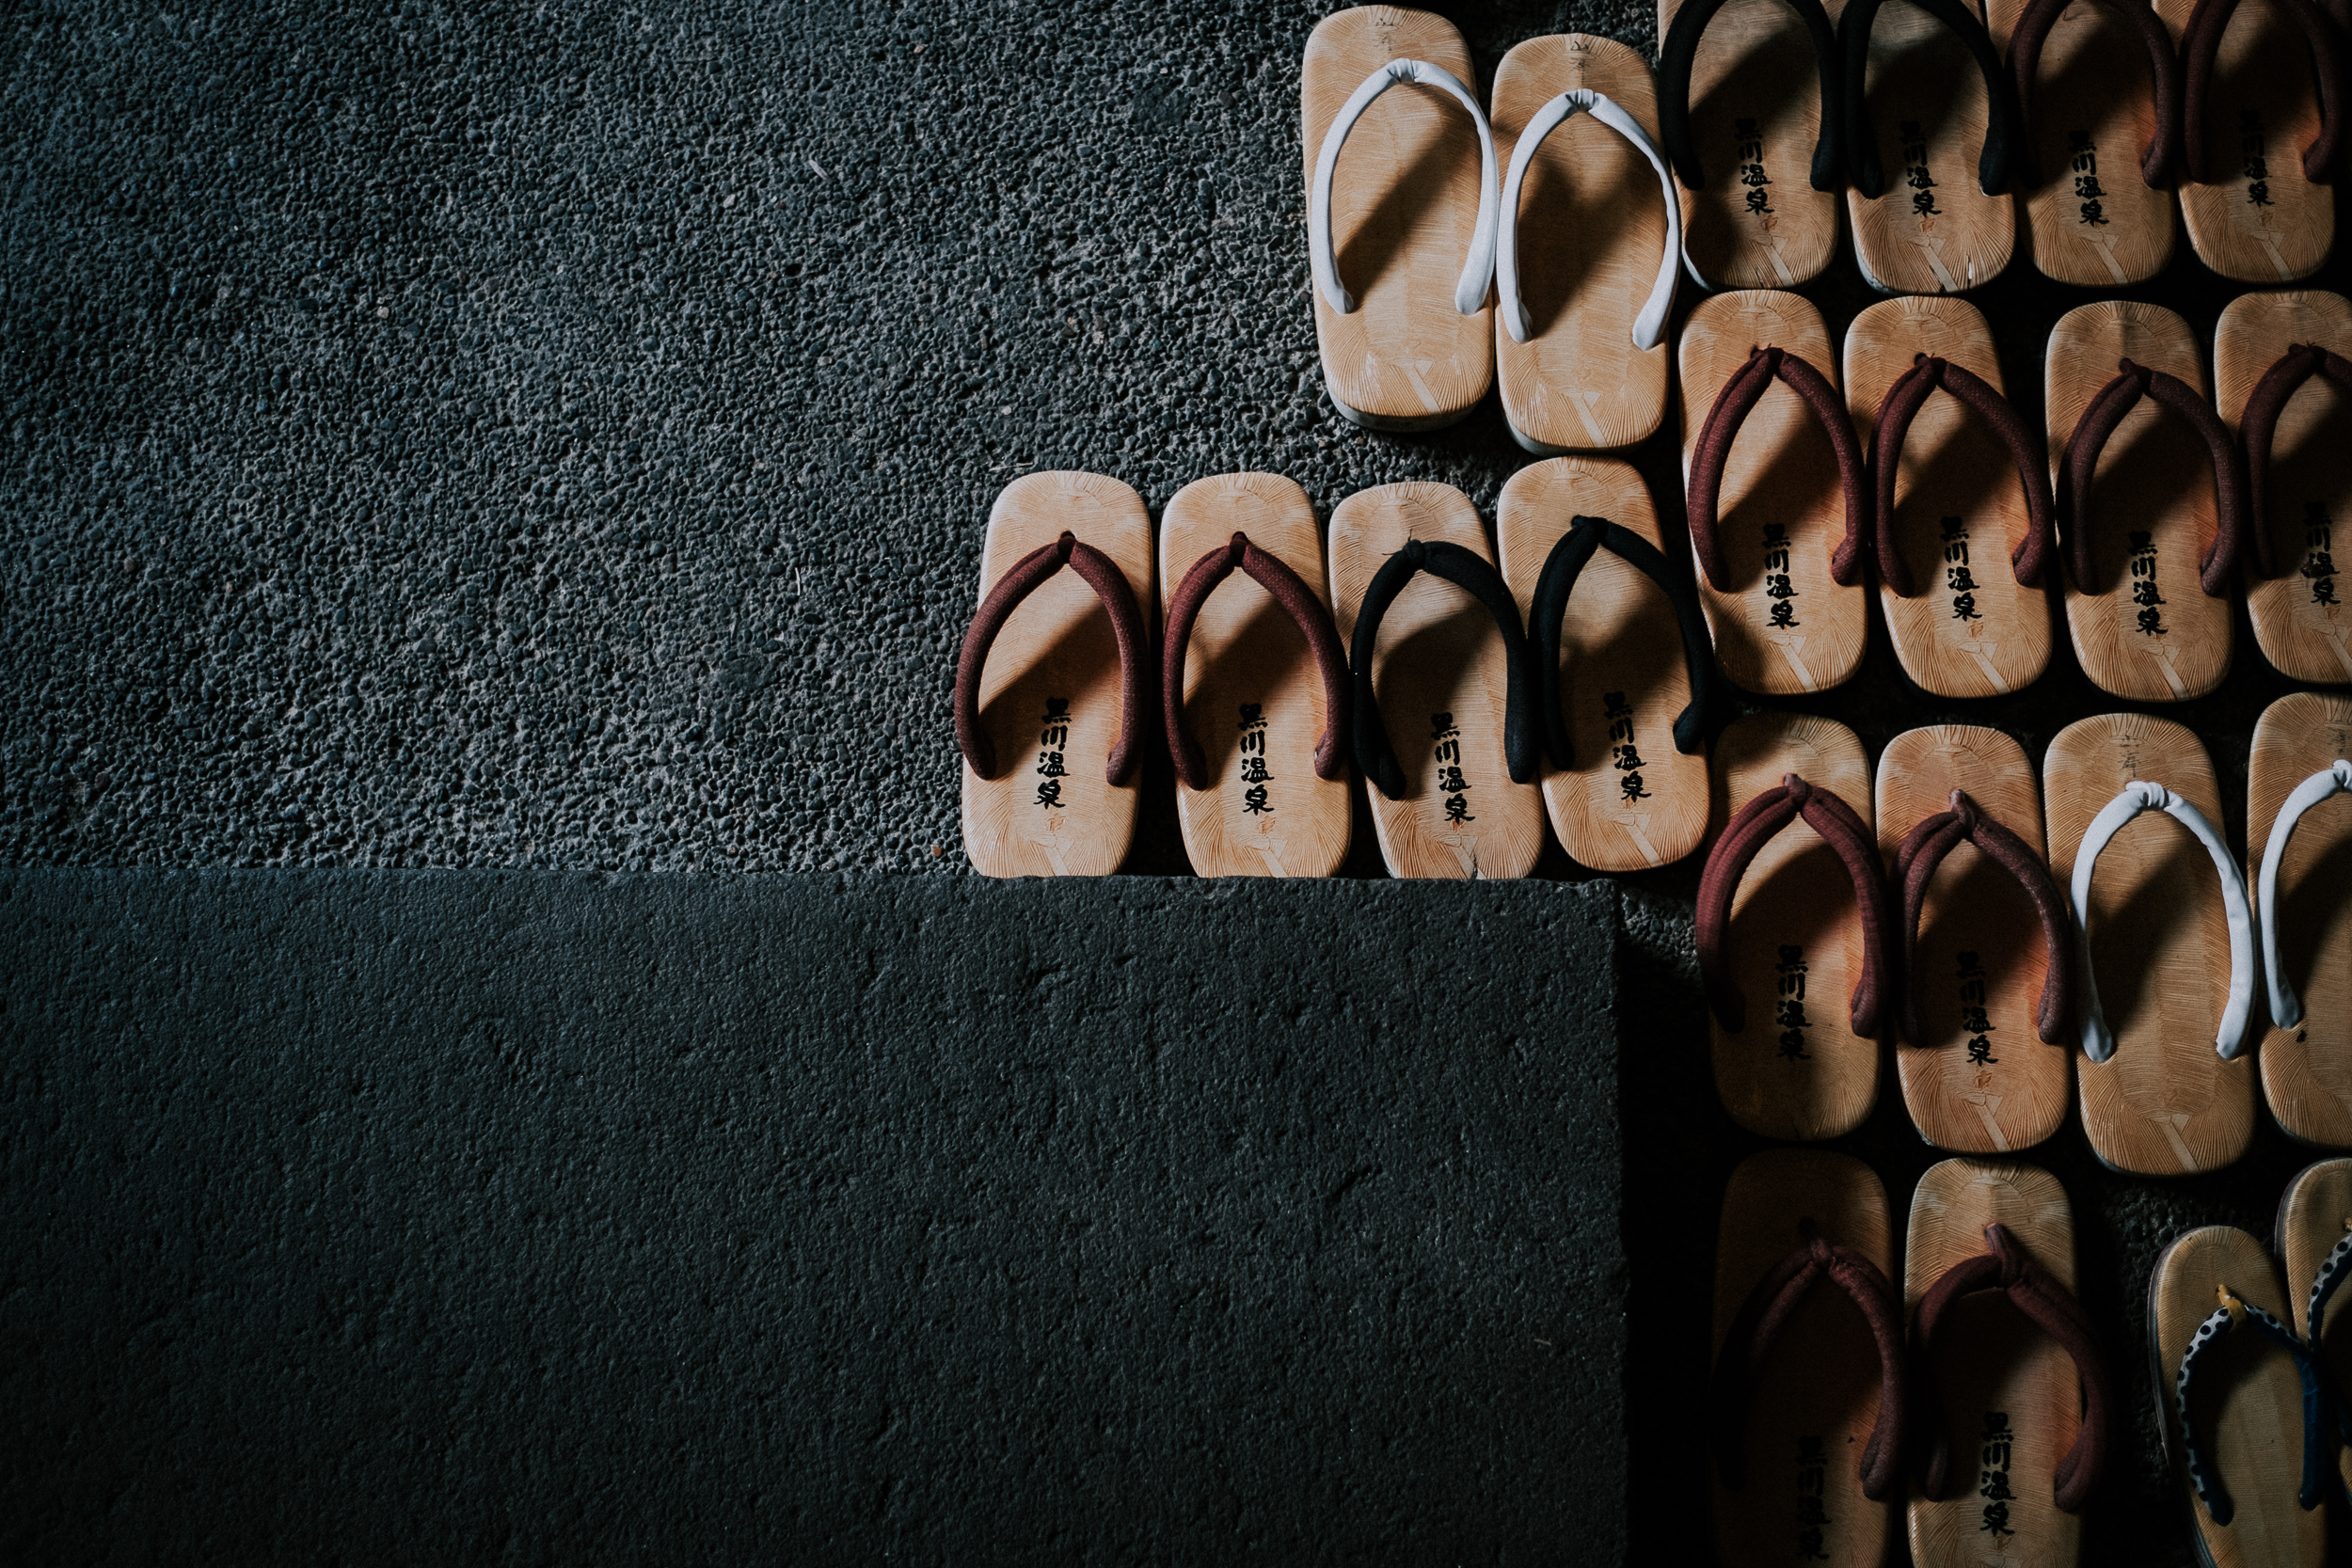  Onsen sandals lined up at Ryokan Sanga.&nbsp; 